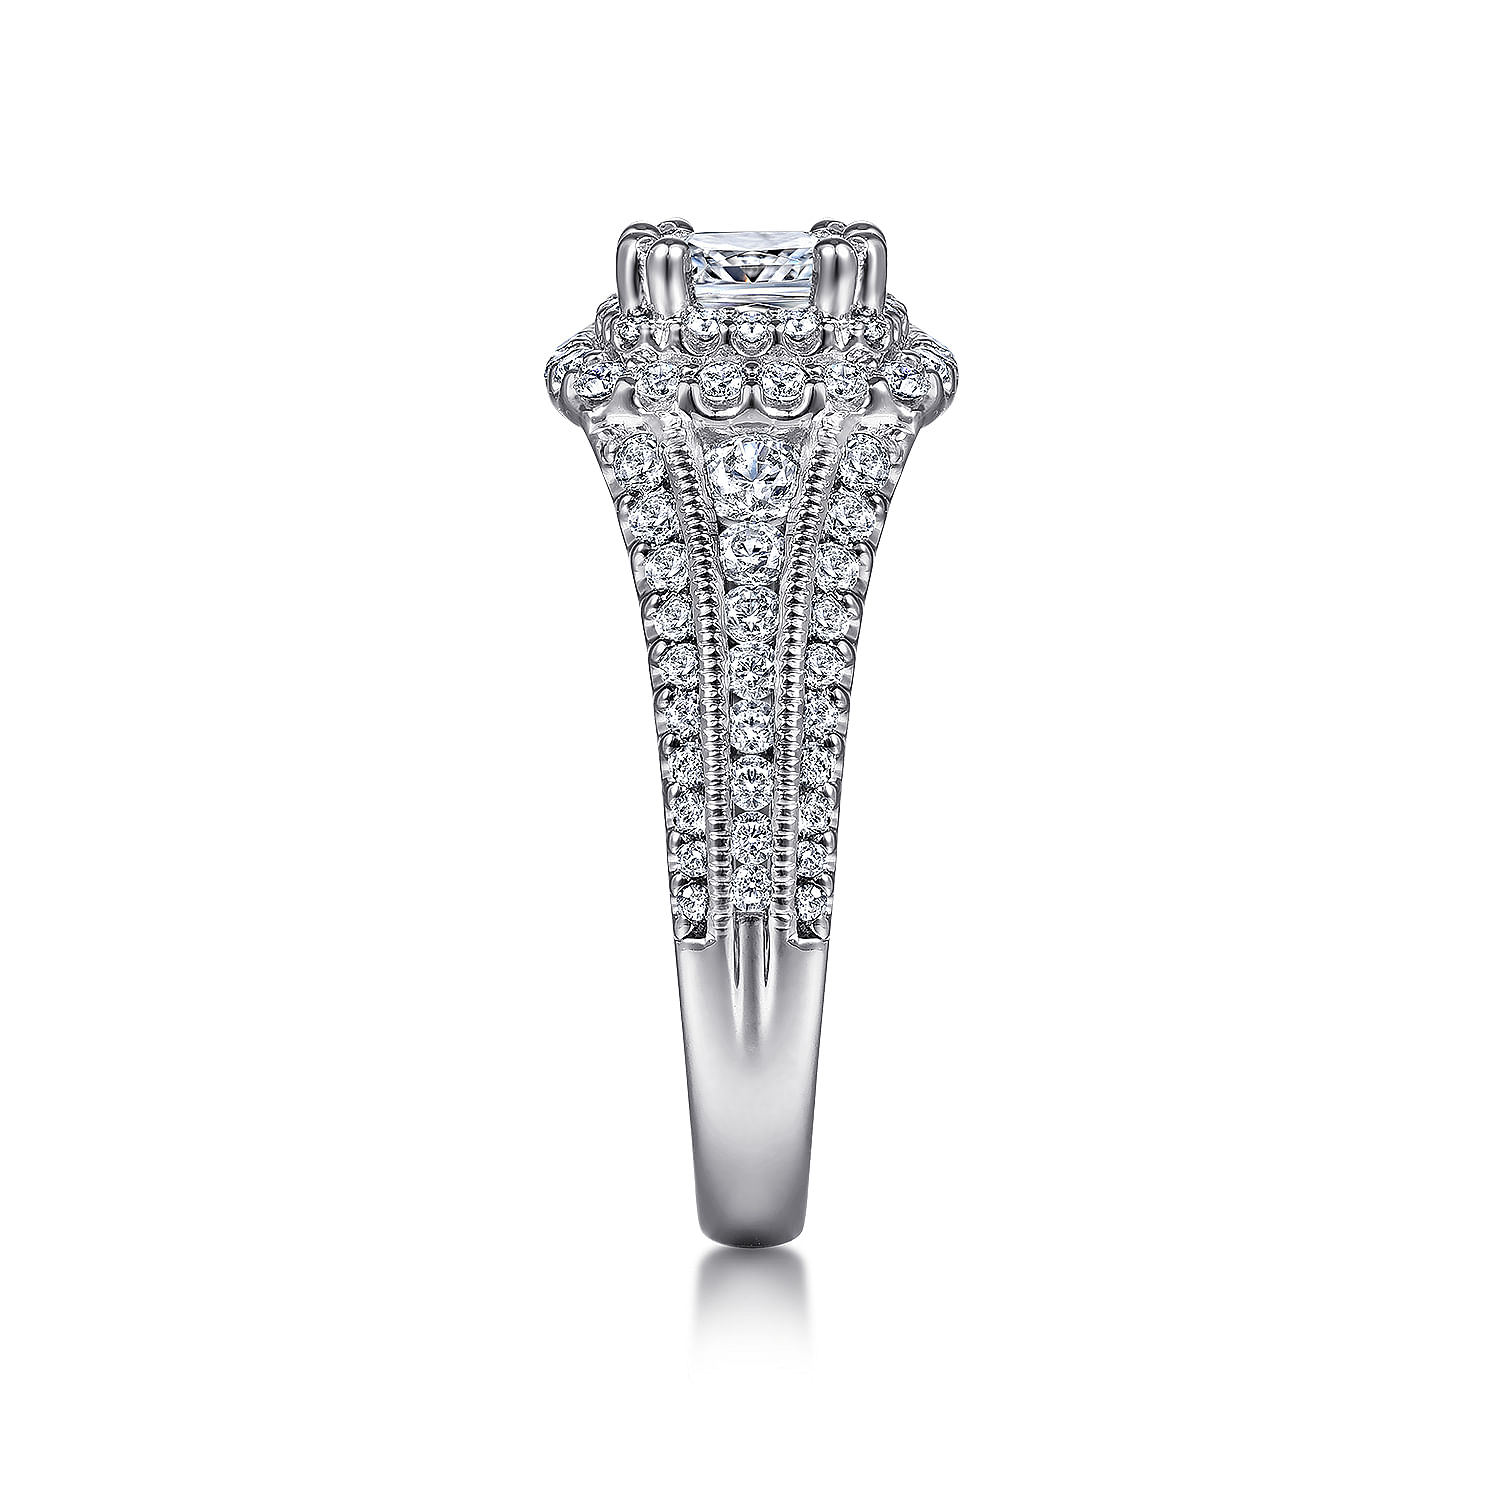 Cushion Cut Engagement Rings | Iconic rings - Gabriel & Co.